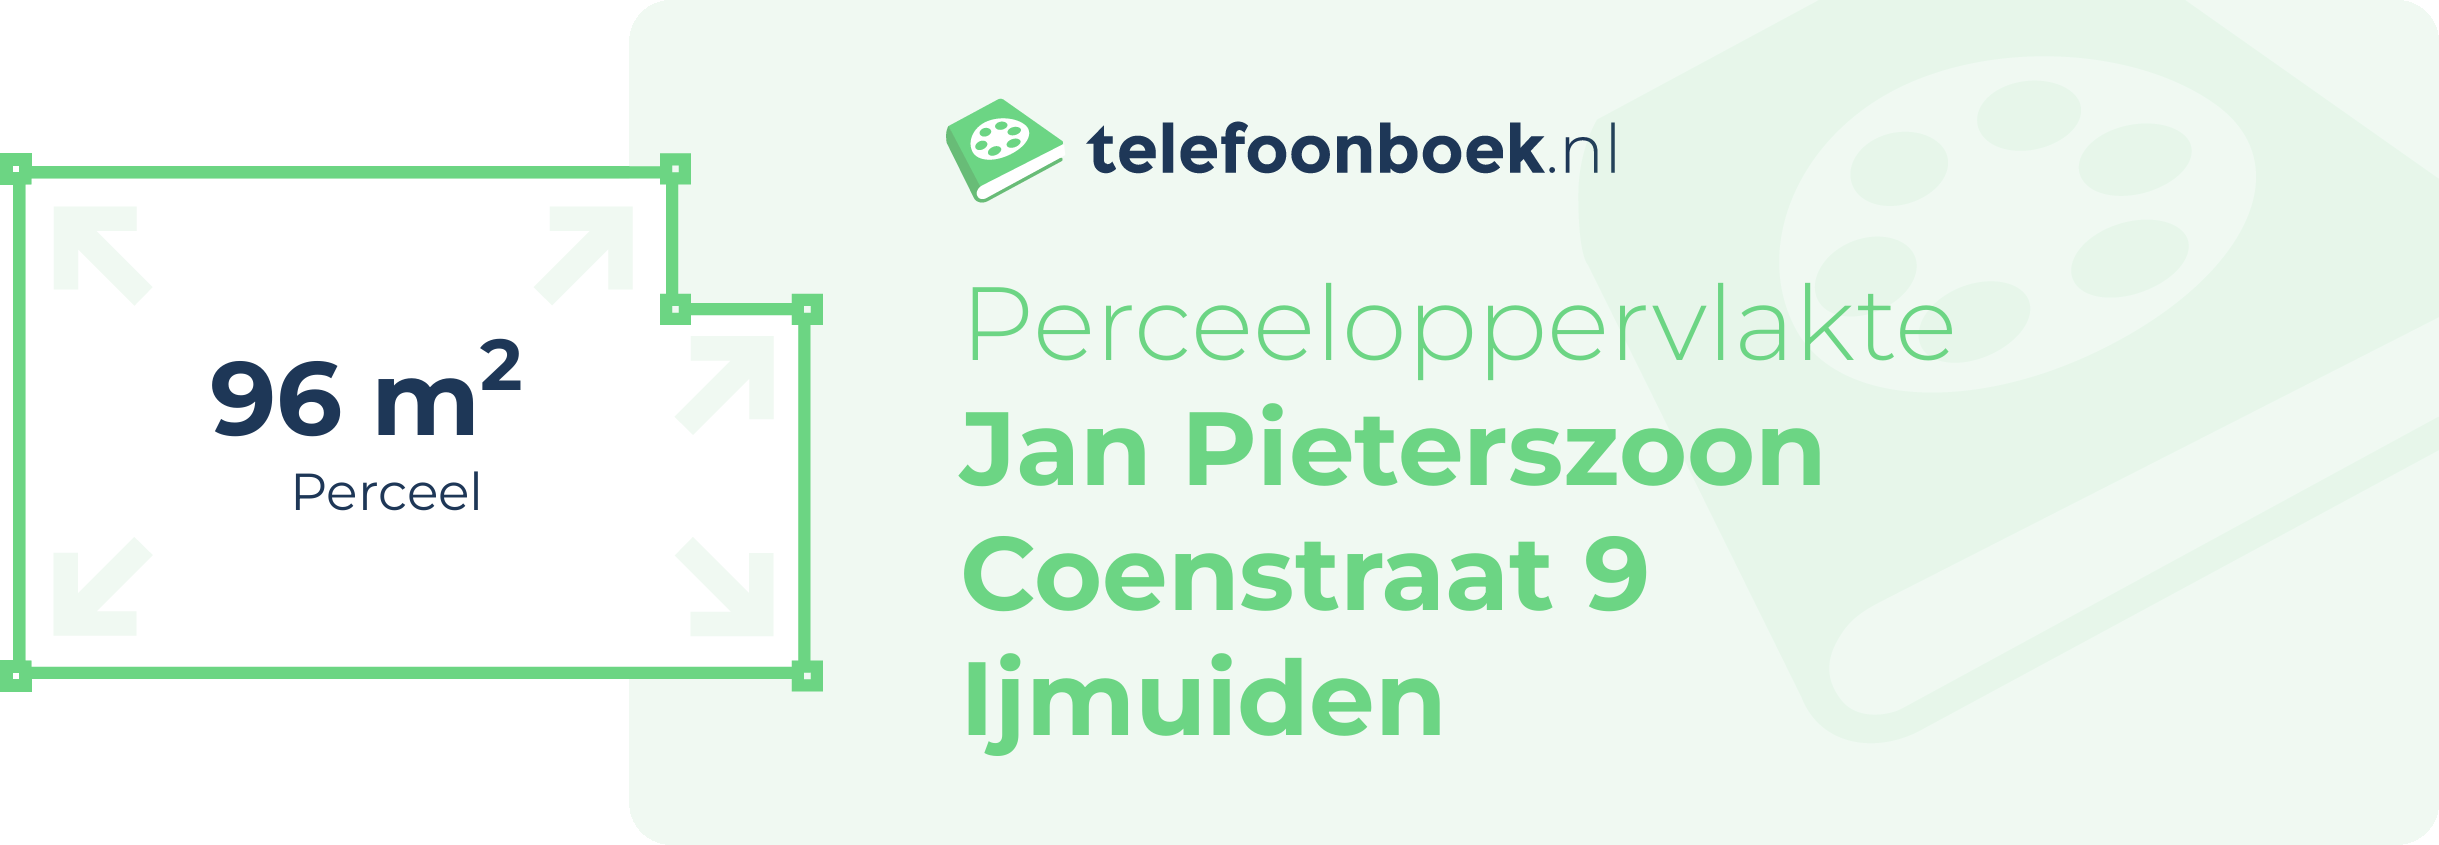 Perceeloppervlakte Jan Pieterszoon Coenstraat 9 Ijmuiden